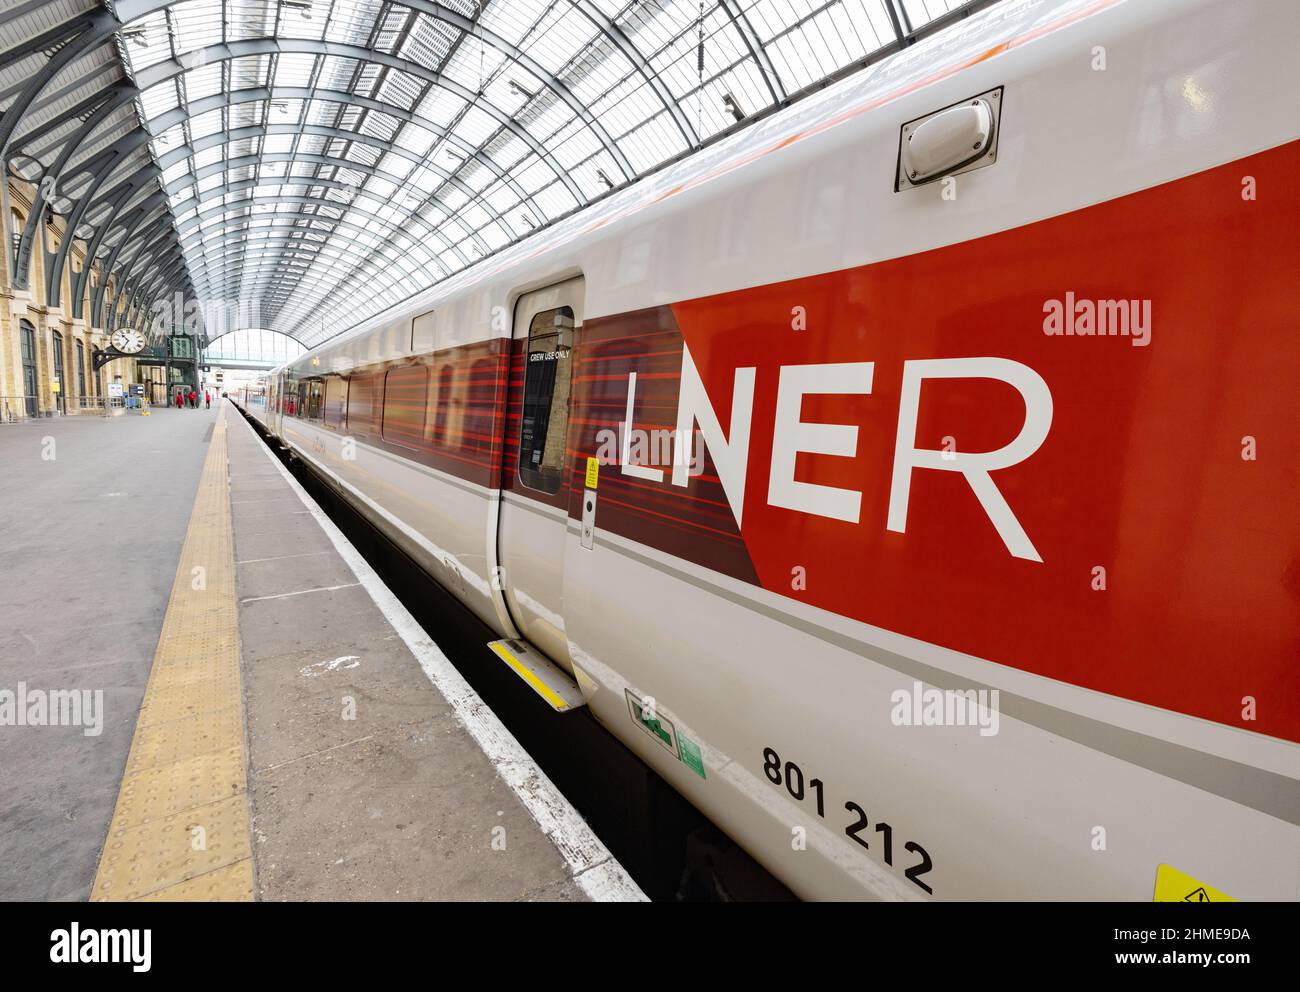 LNER Train. London North Eastern Railway train at the platform, Kings Cross railway station, London UK Stock Photo